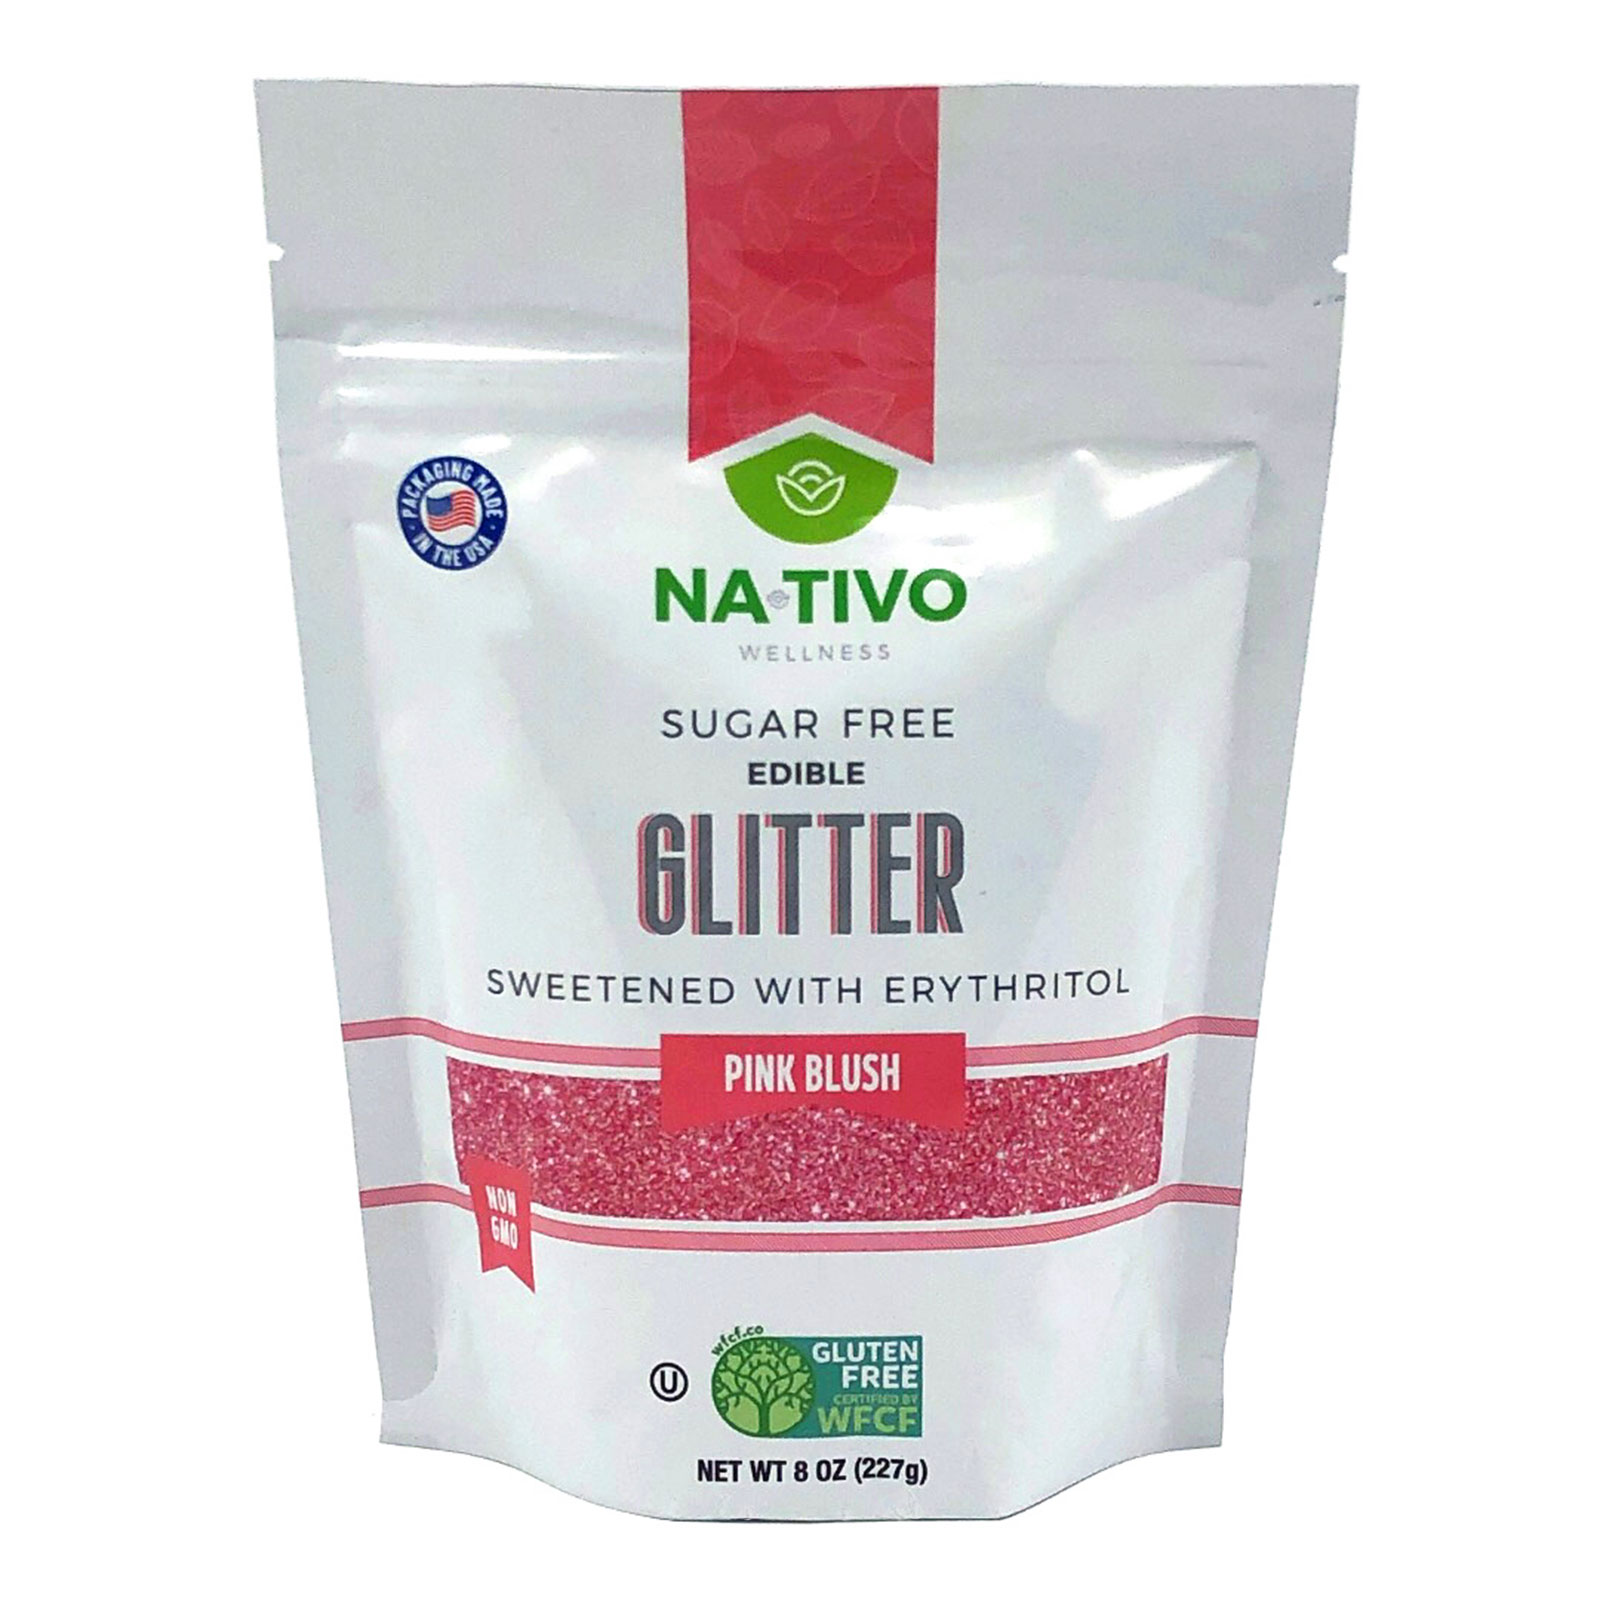 NaTivo Sugar Free Edible Glitter Pink Blush 12 units per case 8.0 oz